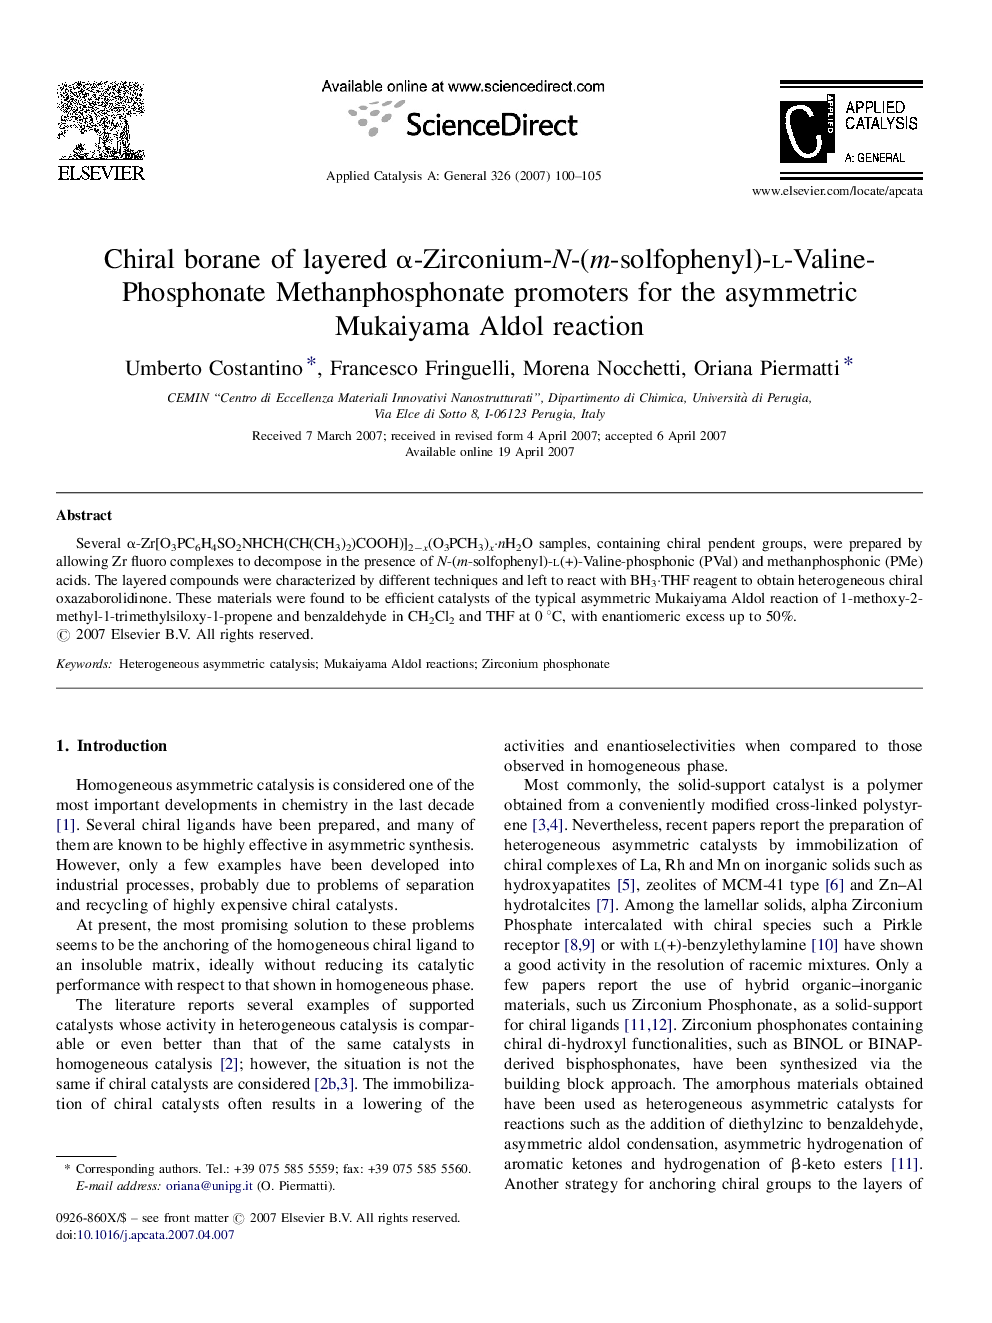 Chiral borane of layered α-Zirconium-N-(m-solfophenyl)-l-Valine-Phosphonate Methanphosphonate promoters for the asymmetric Mukaiyama Aldol reaction